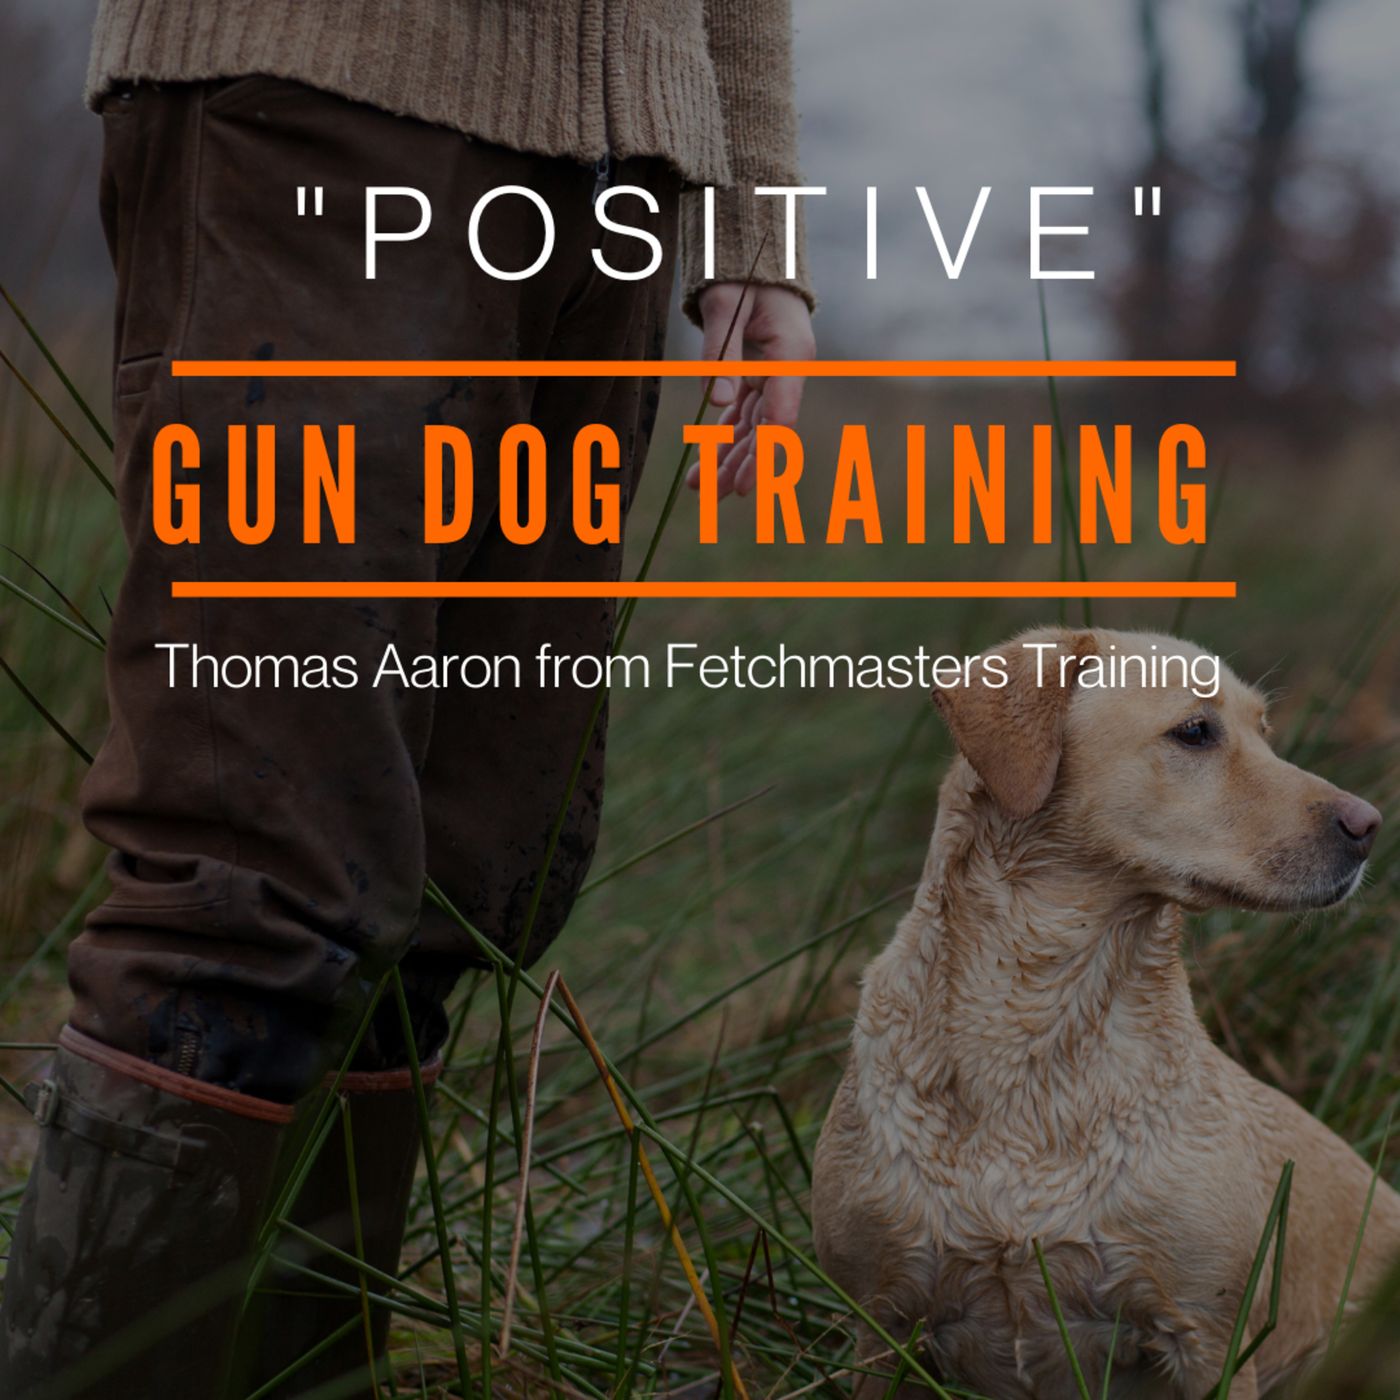 ”Positive” Gun Dog Training